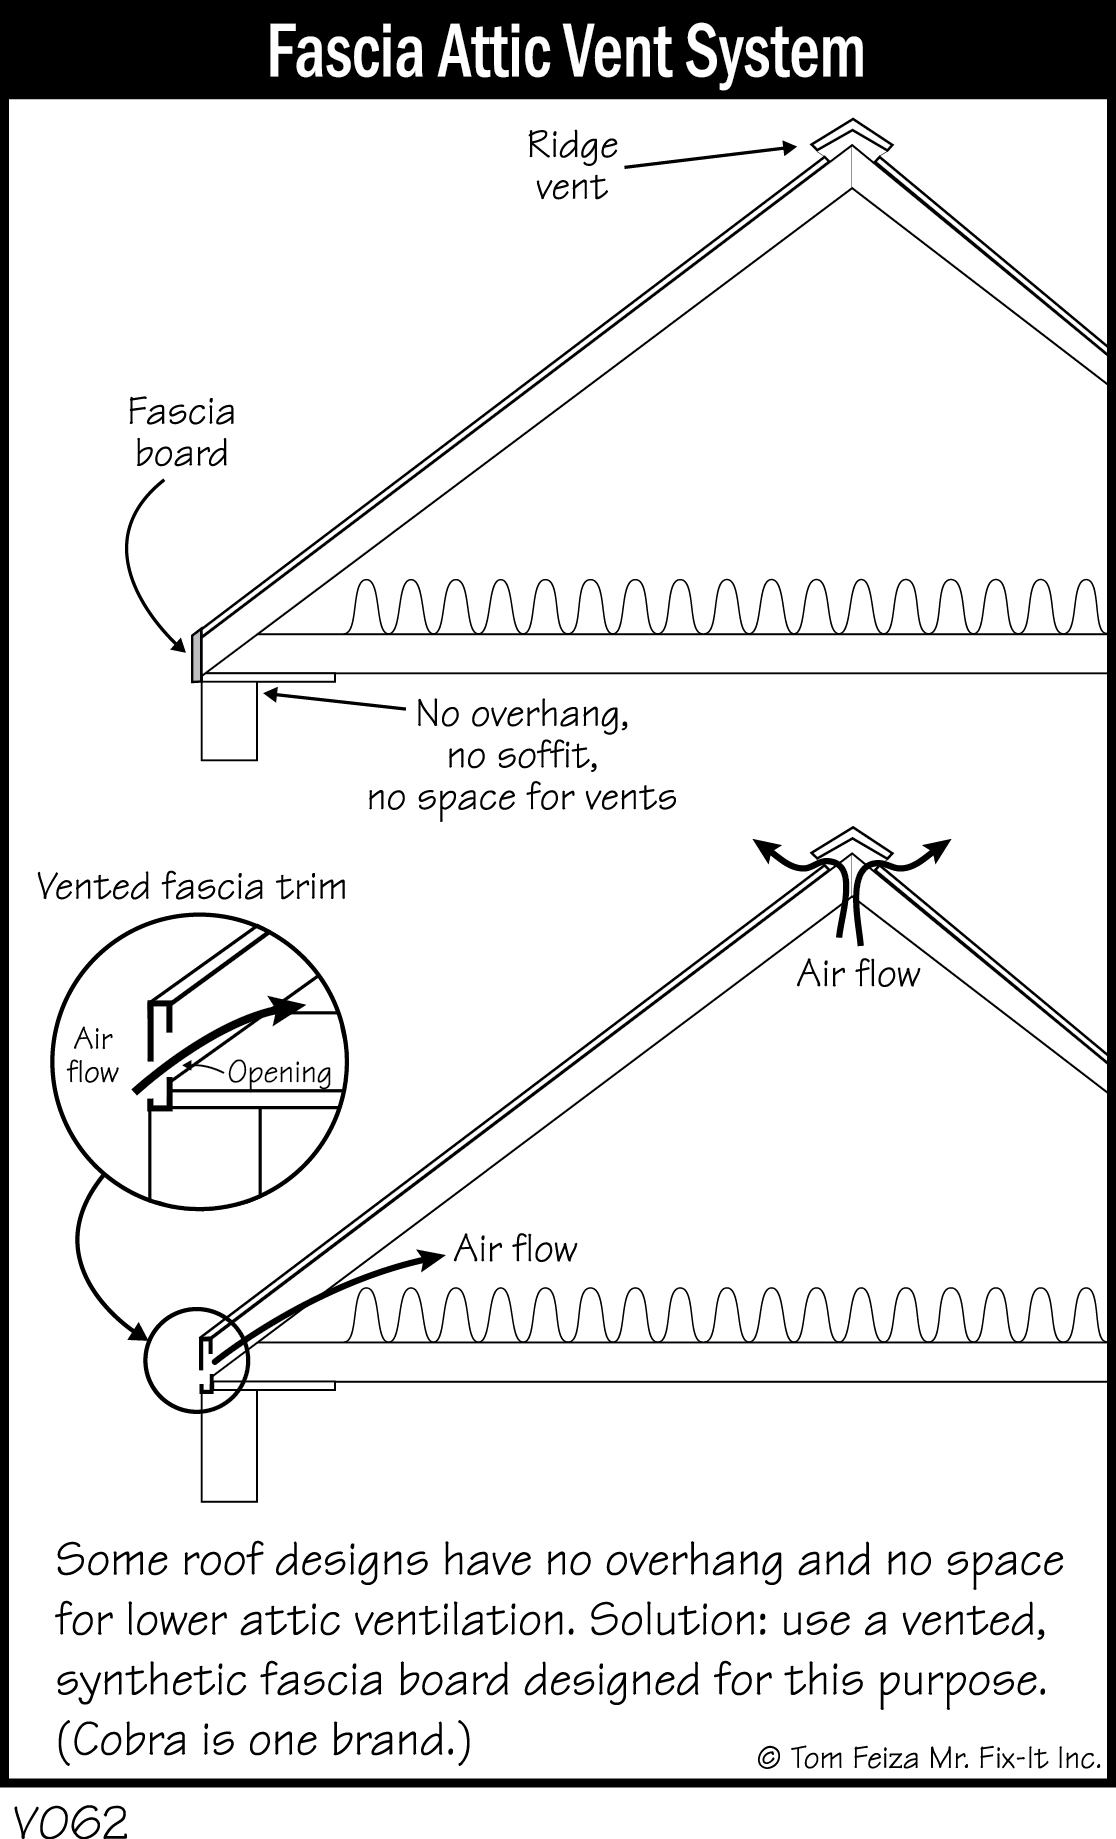 V062 - Fascia Attic Vent System - Covered Bridge Professional Home ...